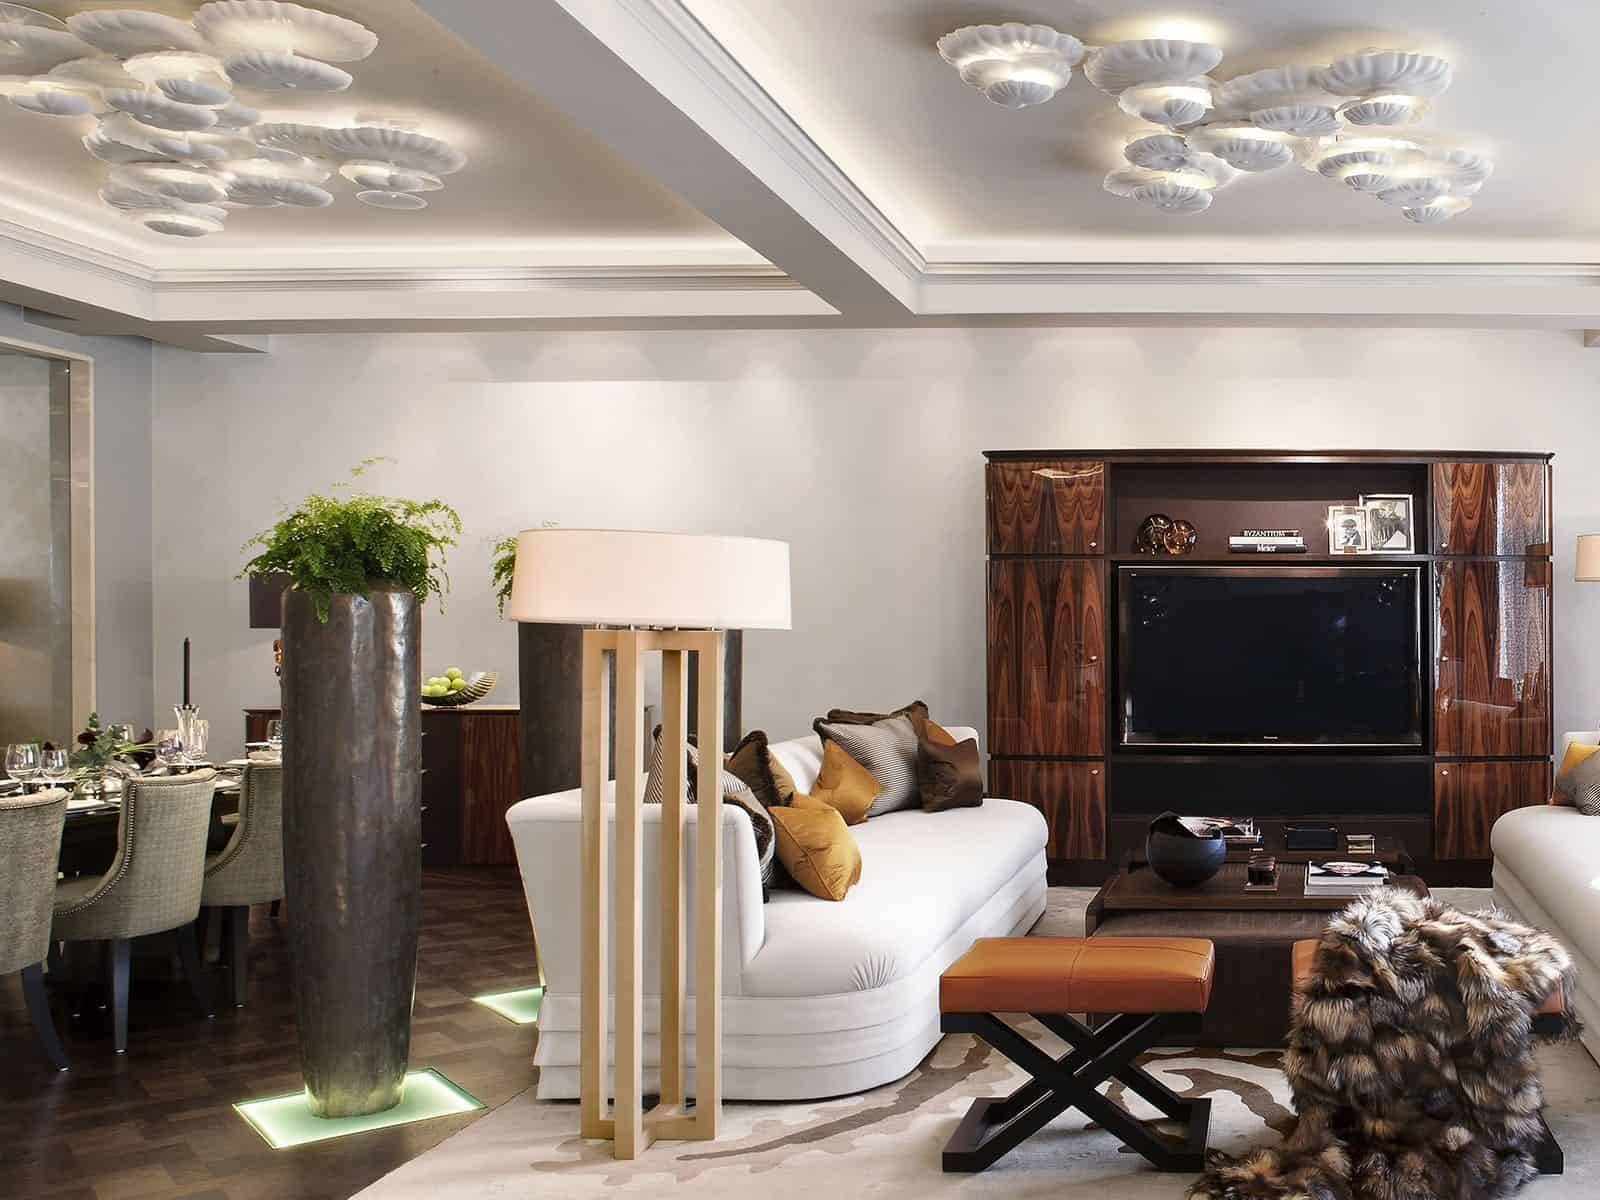 Sculptural light arrangements for ceiling coffers